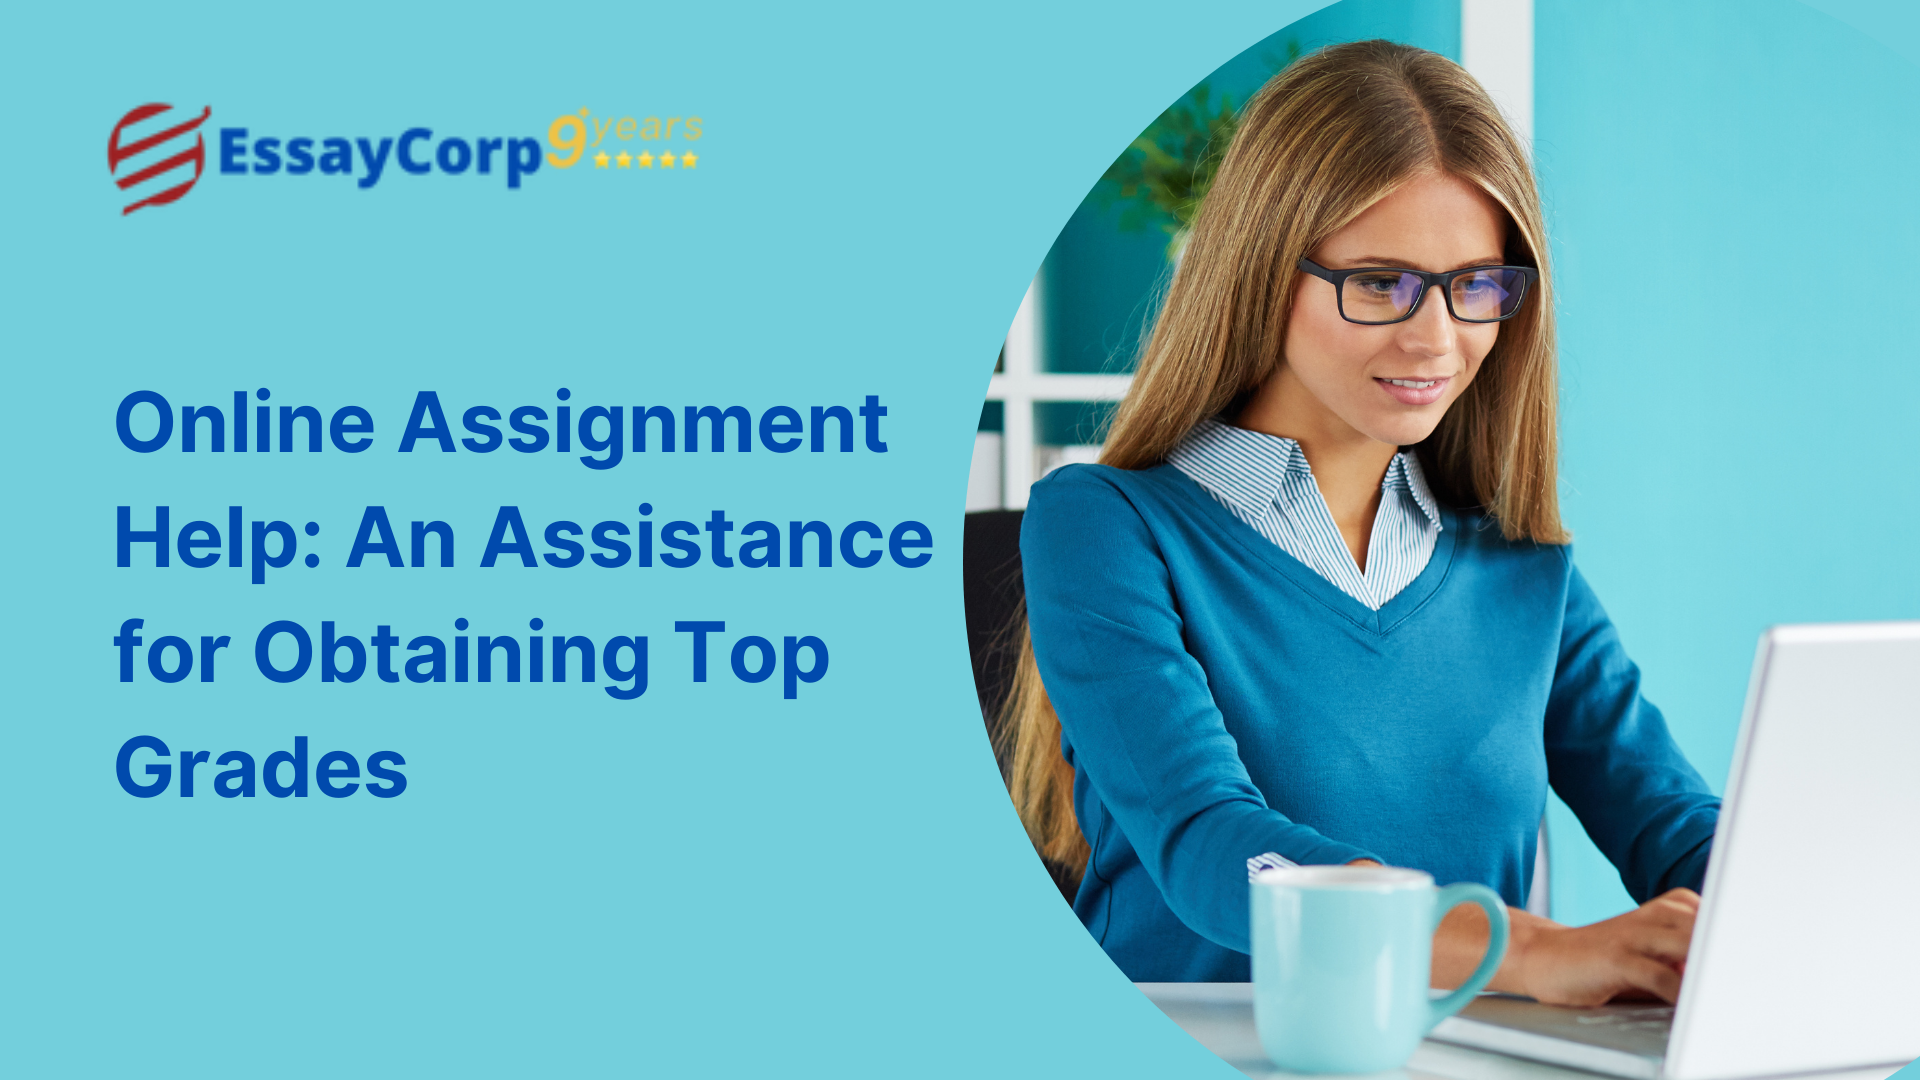 Online Assignment Help: An Assistance for Obtaining Top Grades